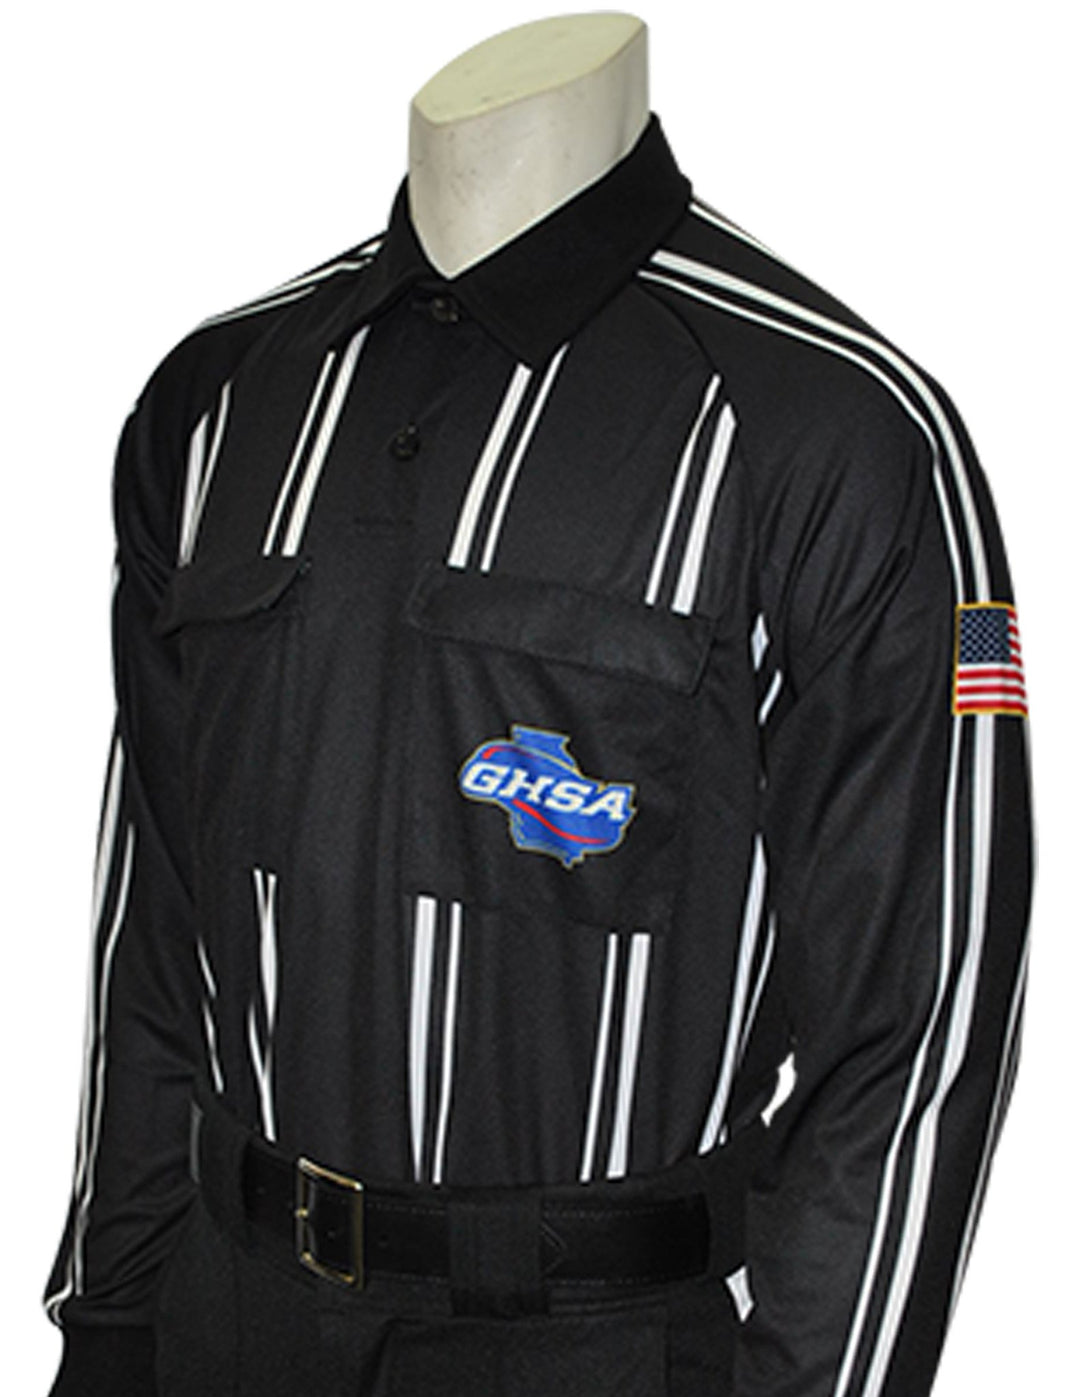 USA901GA Black - Smitty "Made in USA" - Dye Sub Georgia Soccer Long Sleeve Shirt